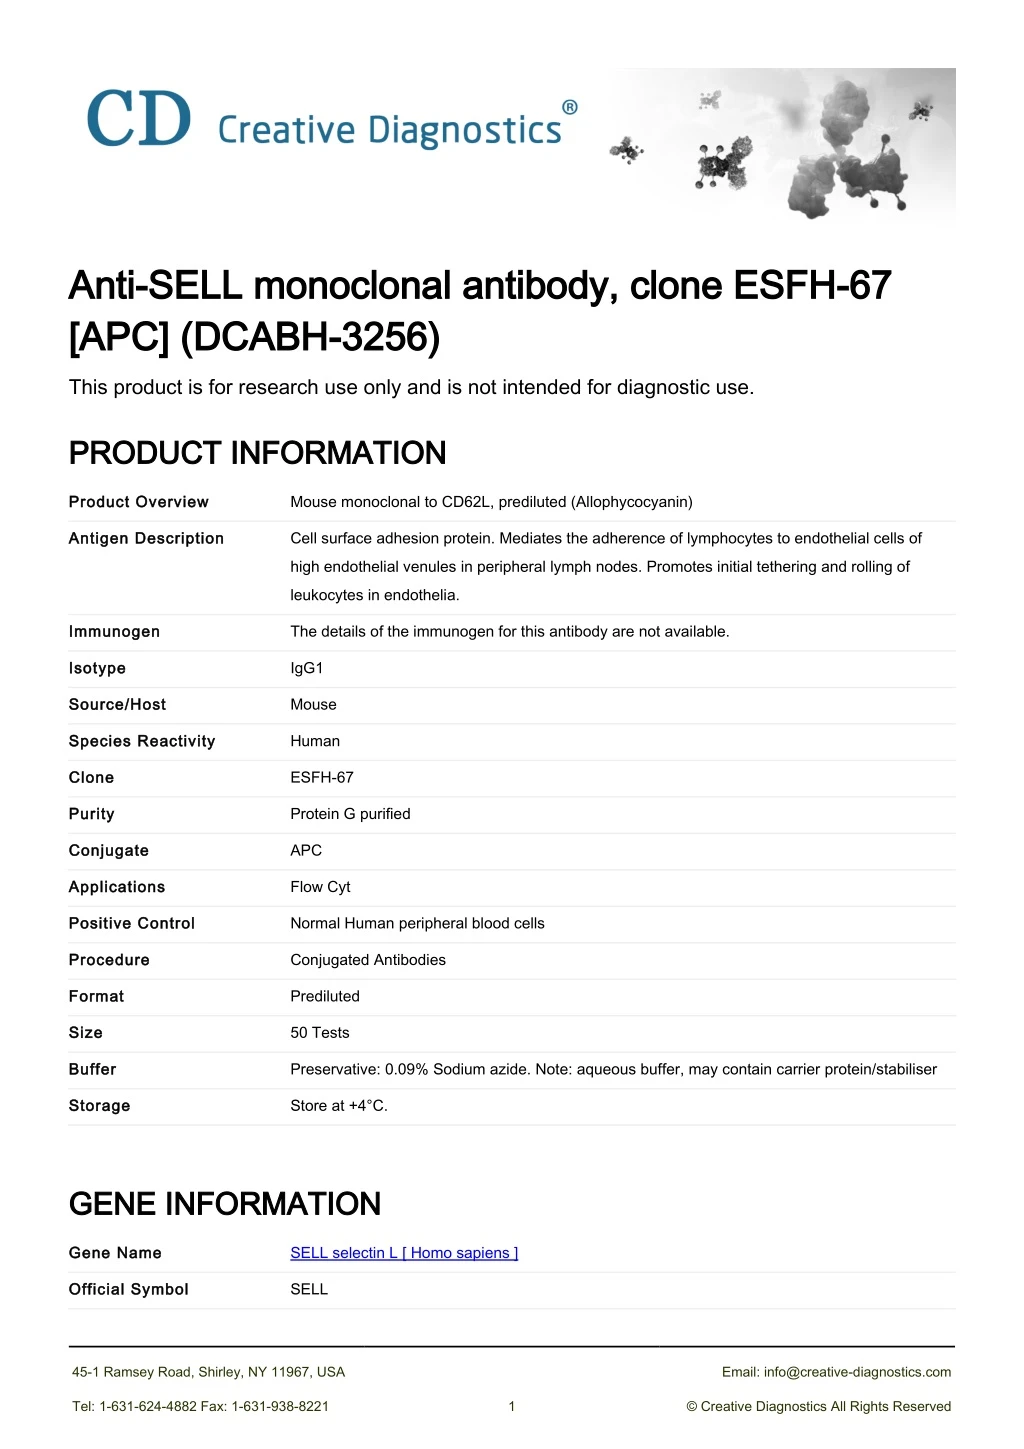 anti sell monoclonal antibody clone esfh 67 anti